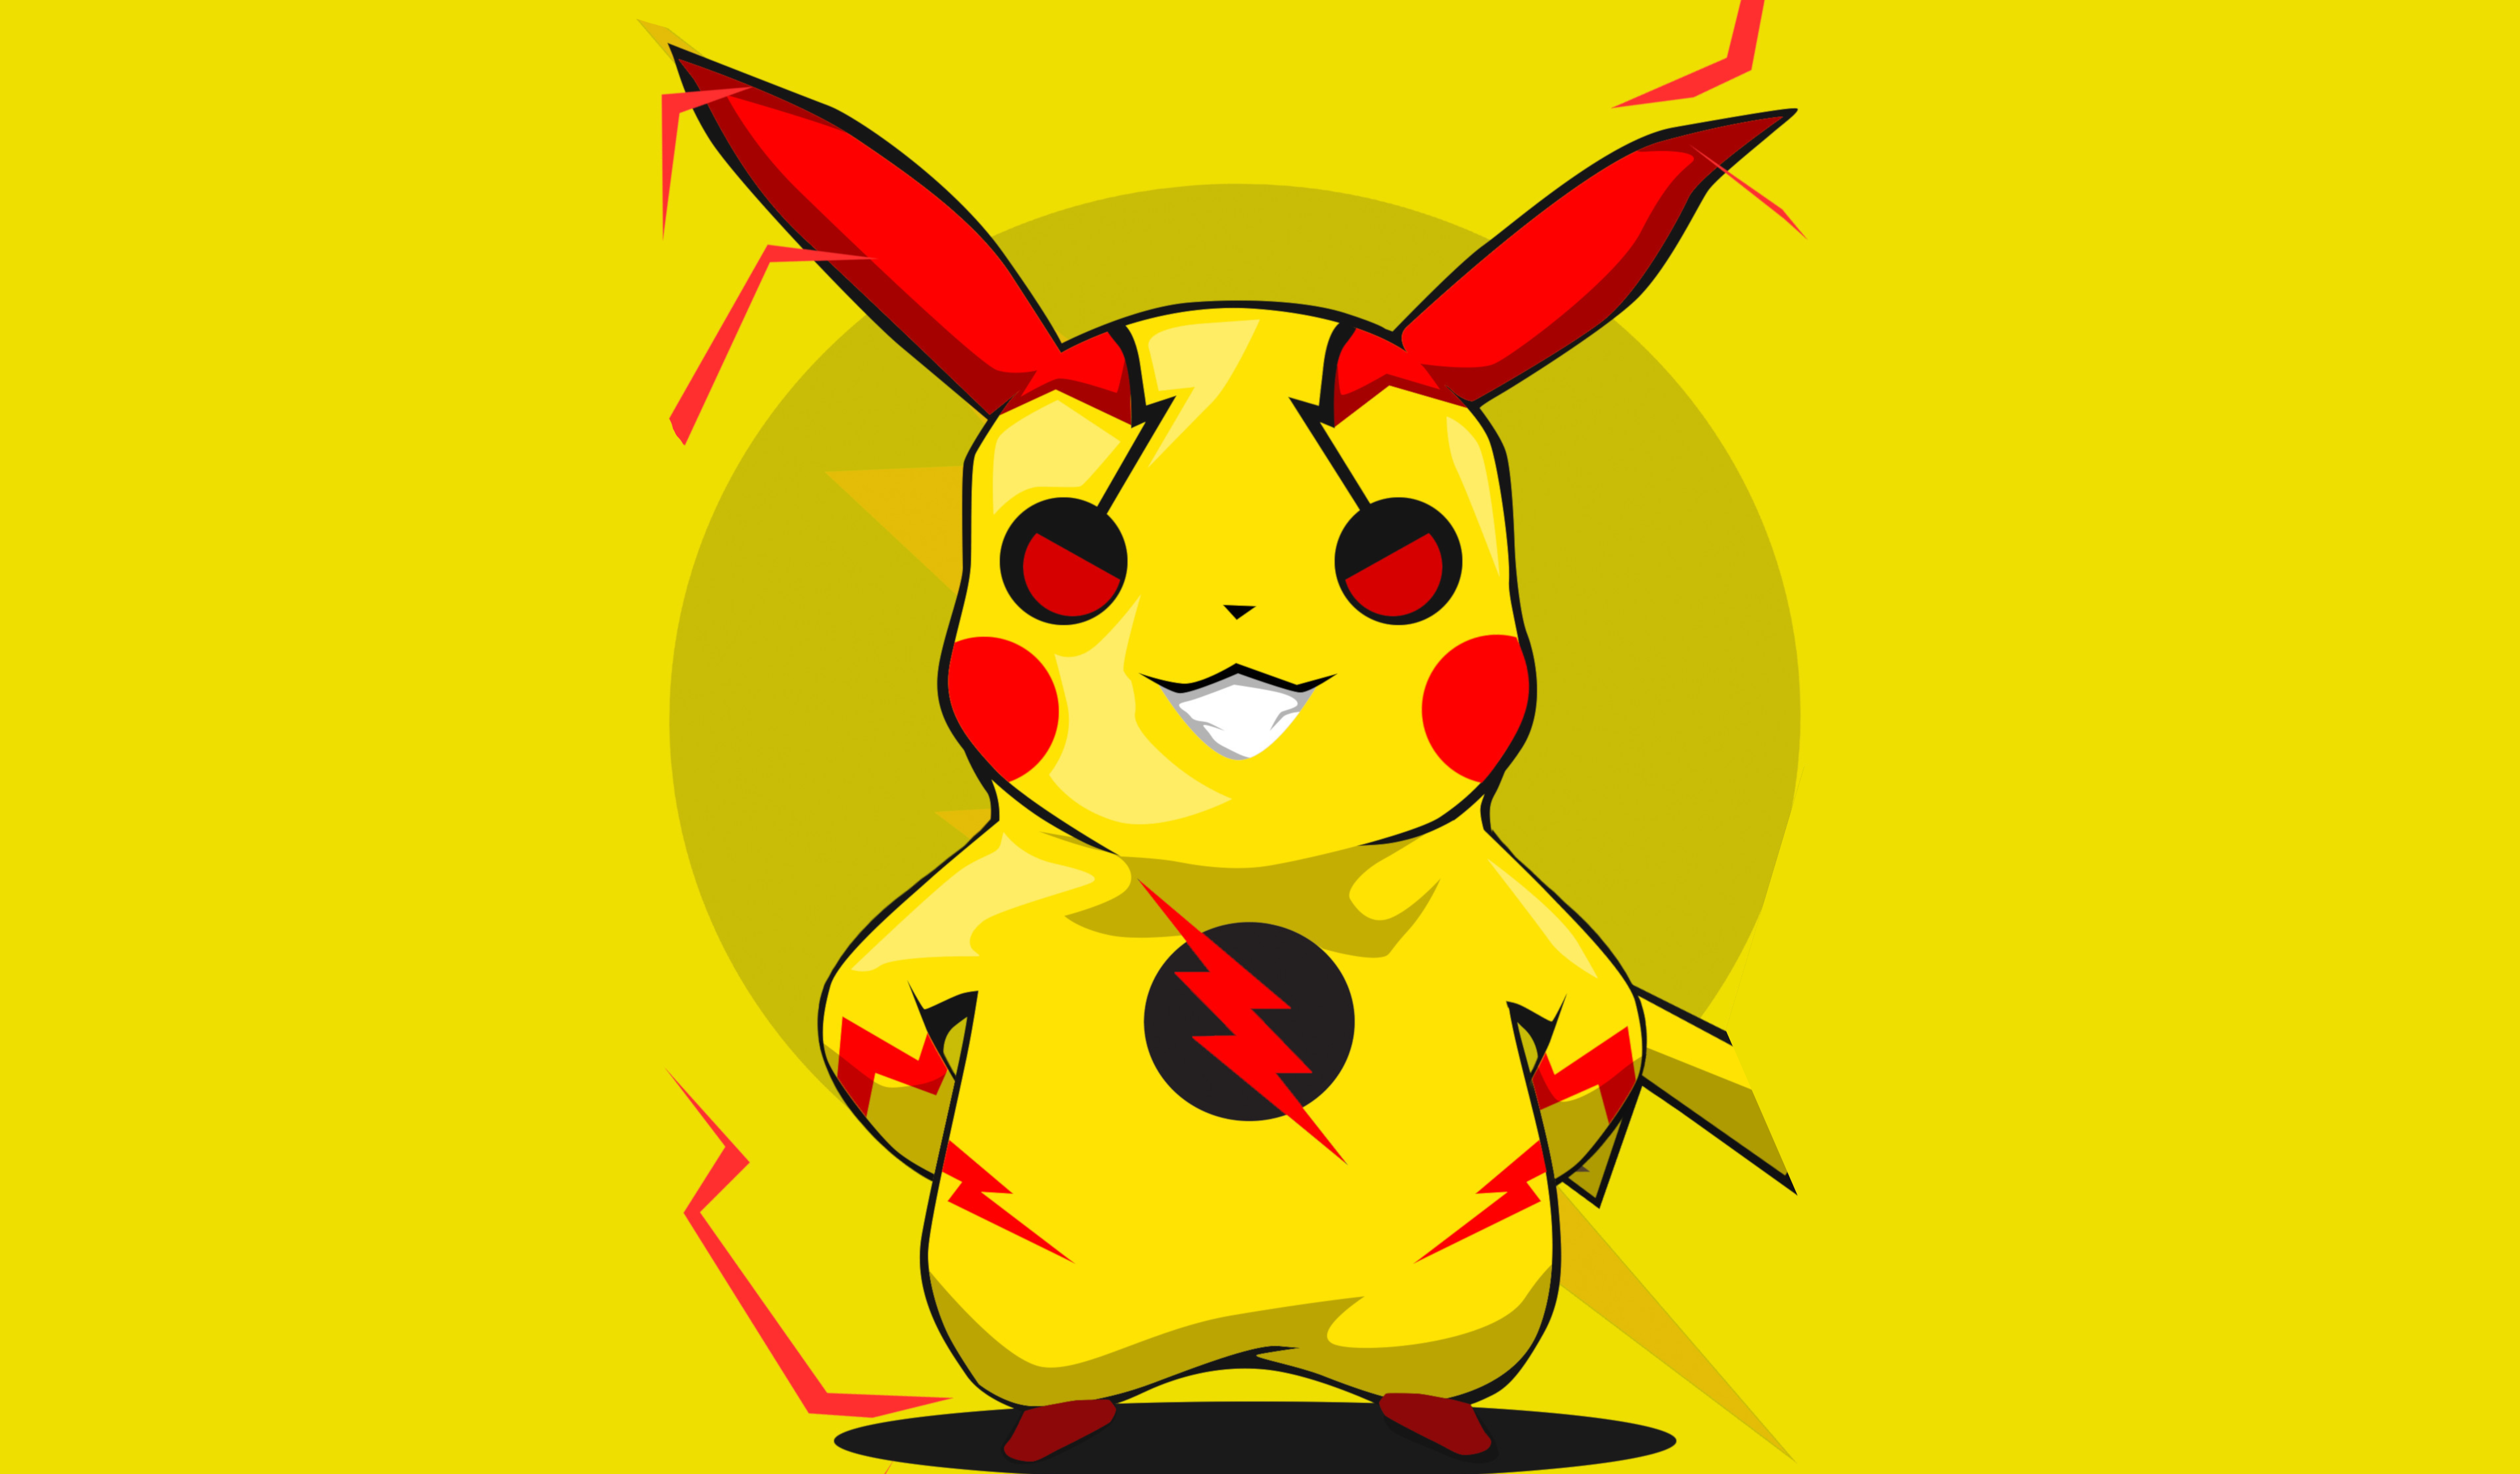 Pikachu by BossLogic